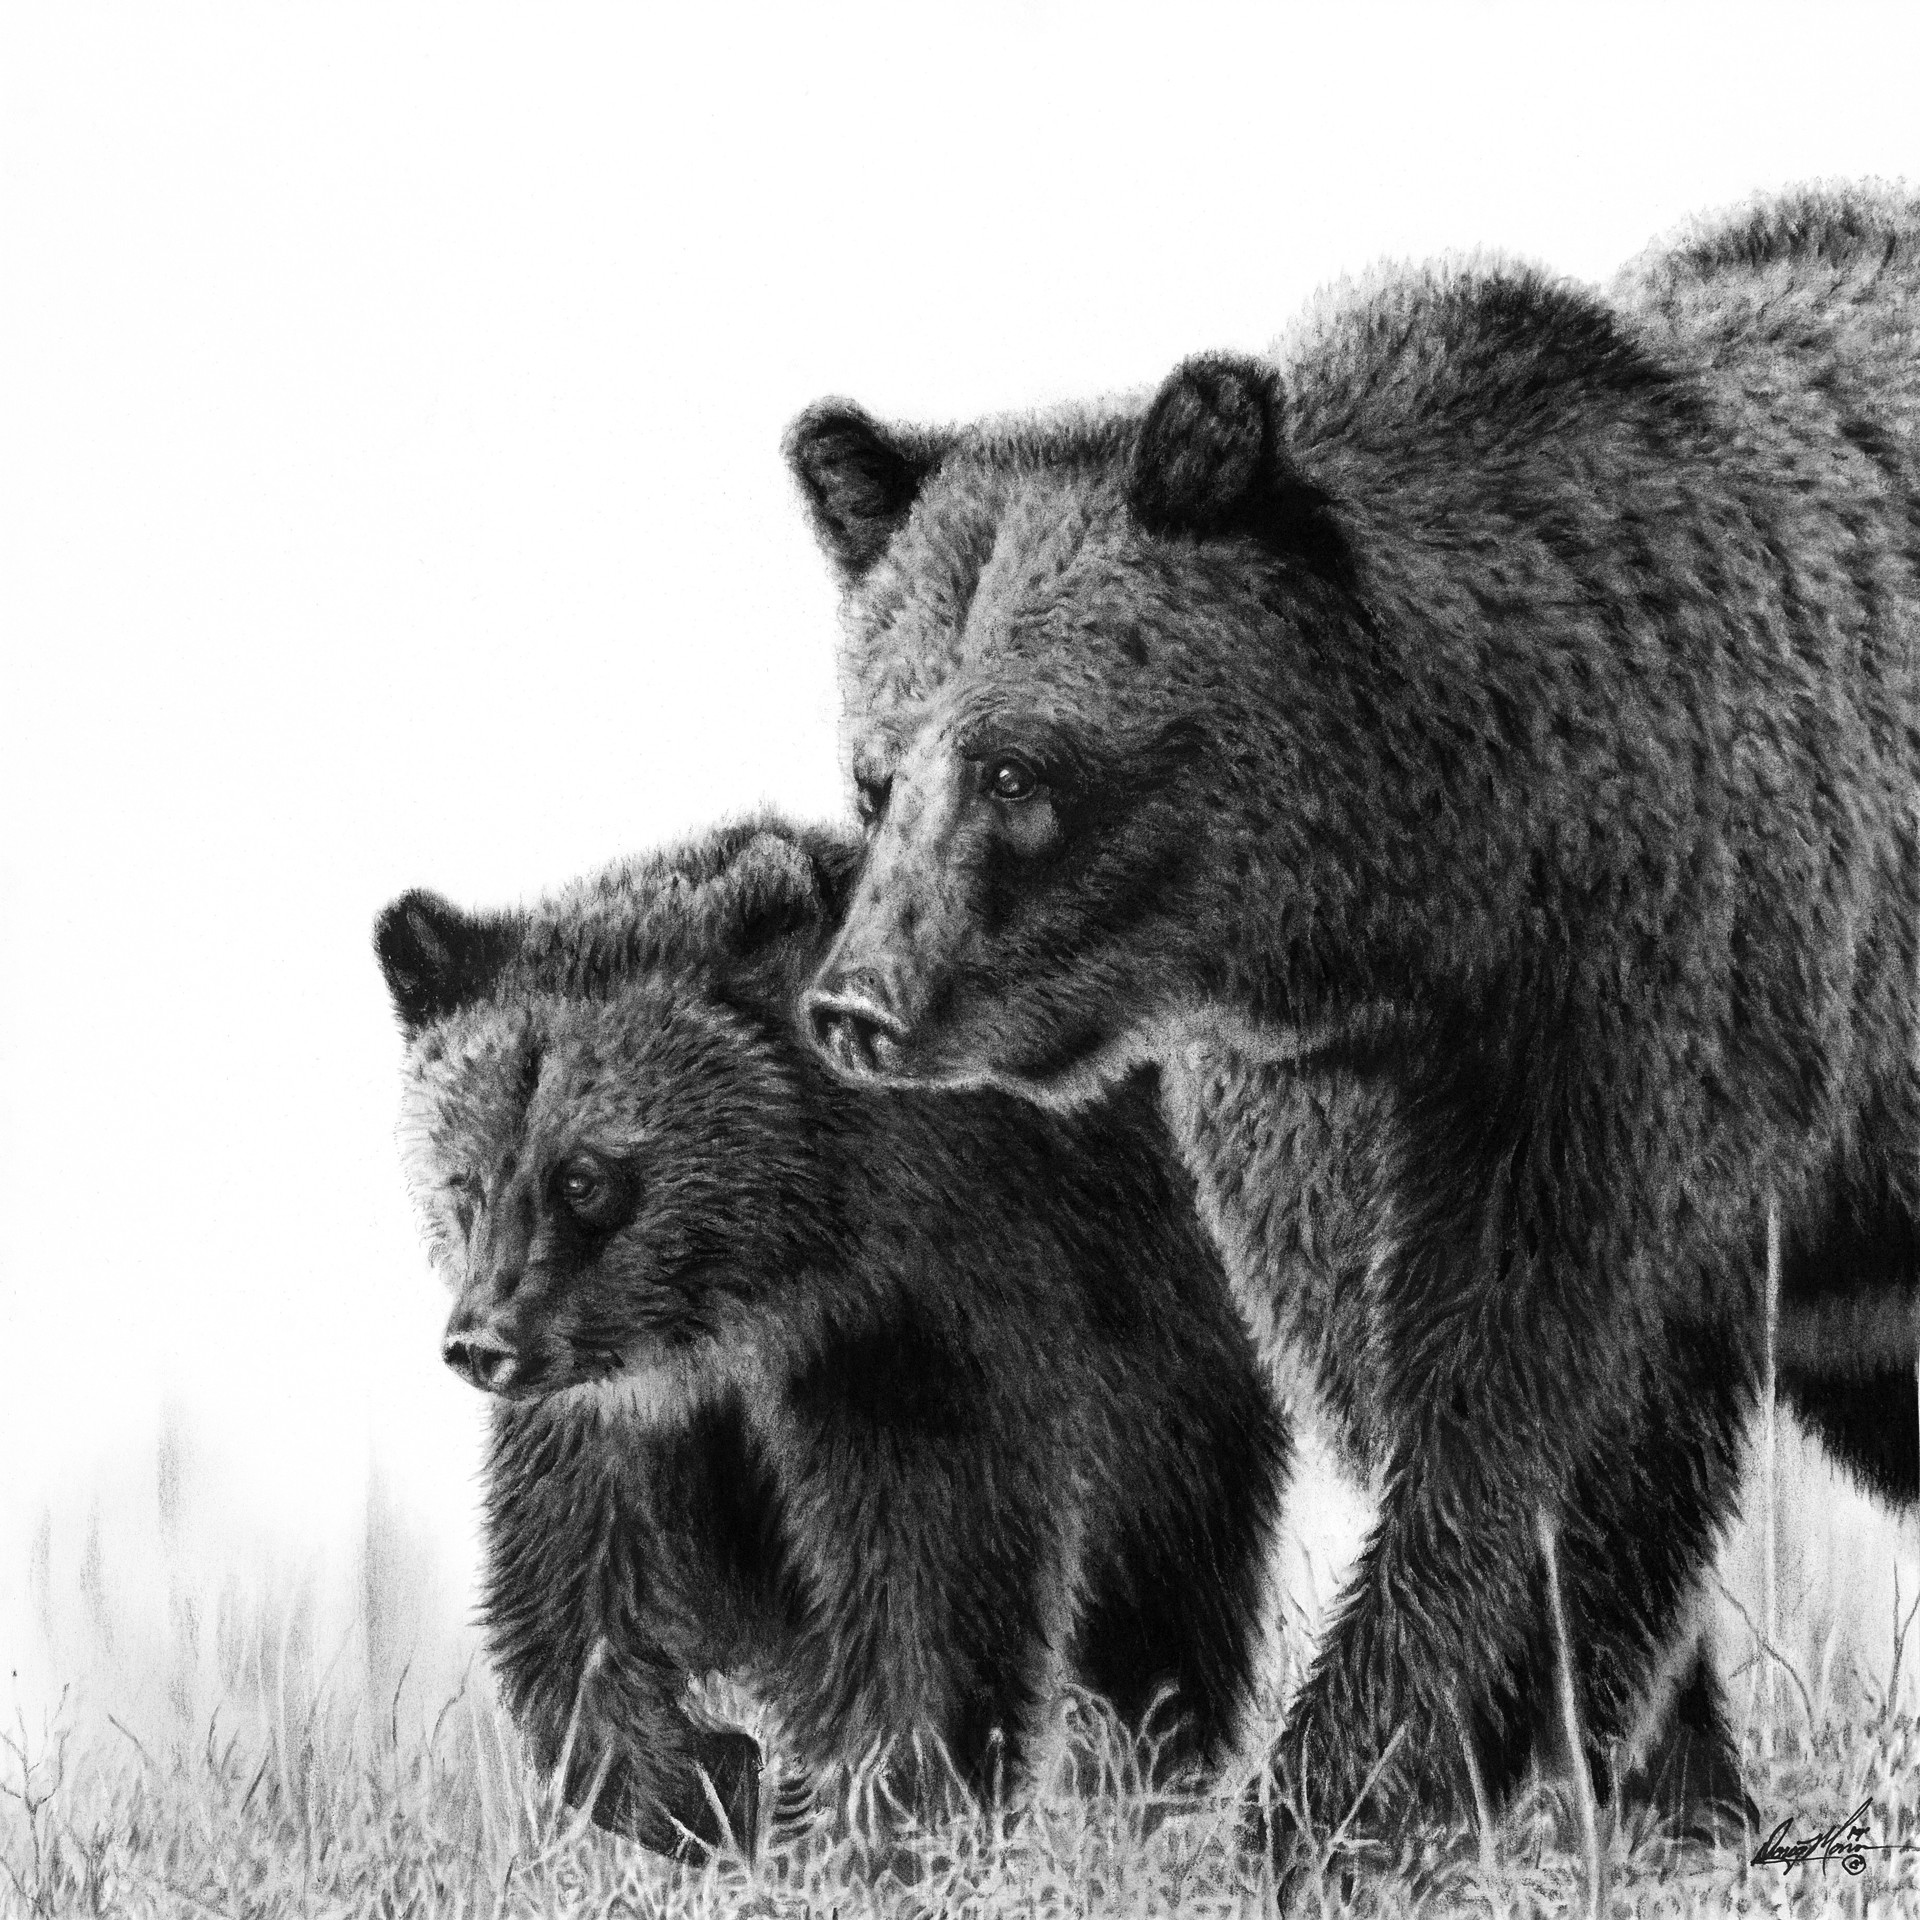 Two Bears by Doug Monson